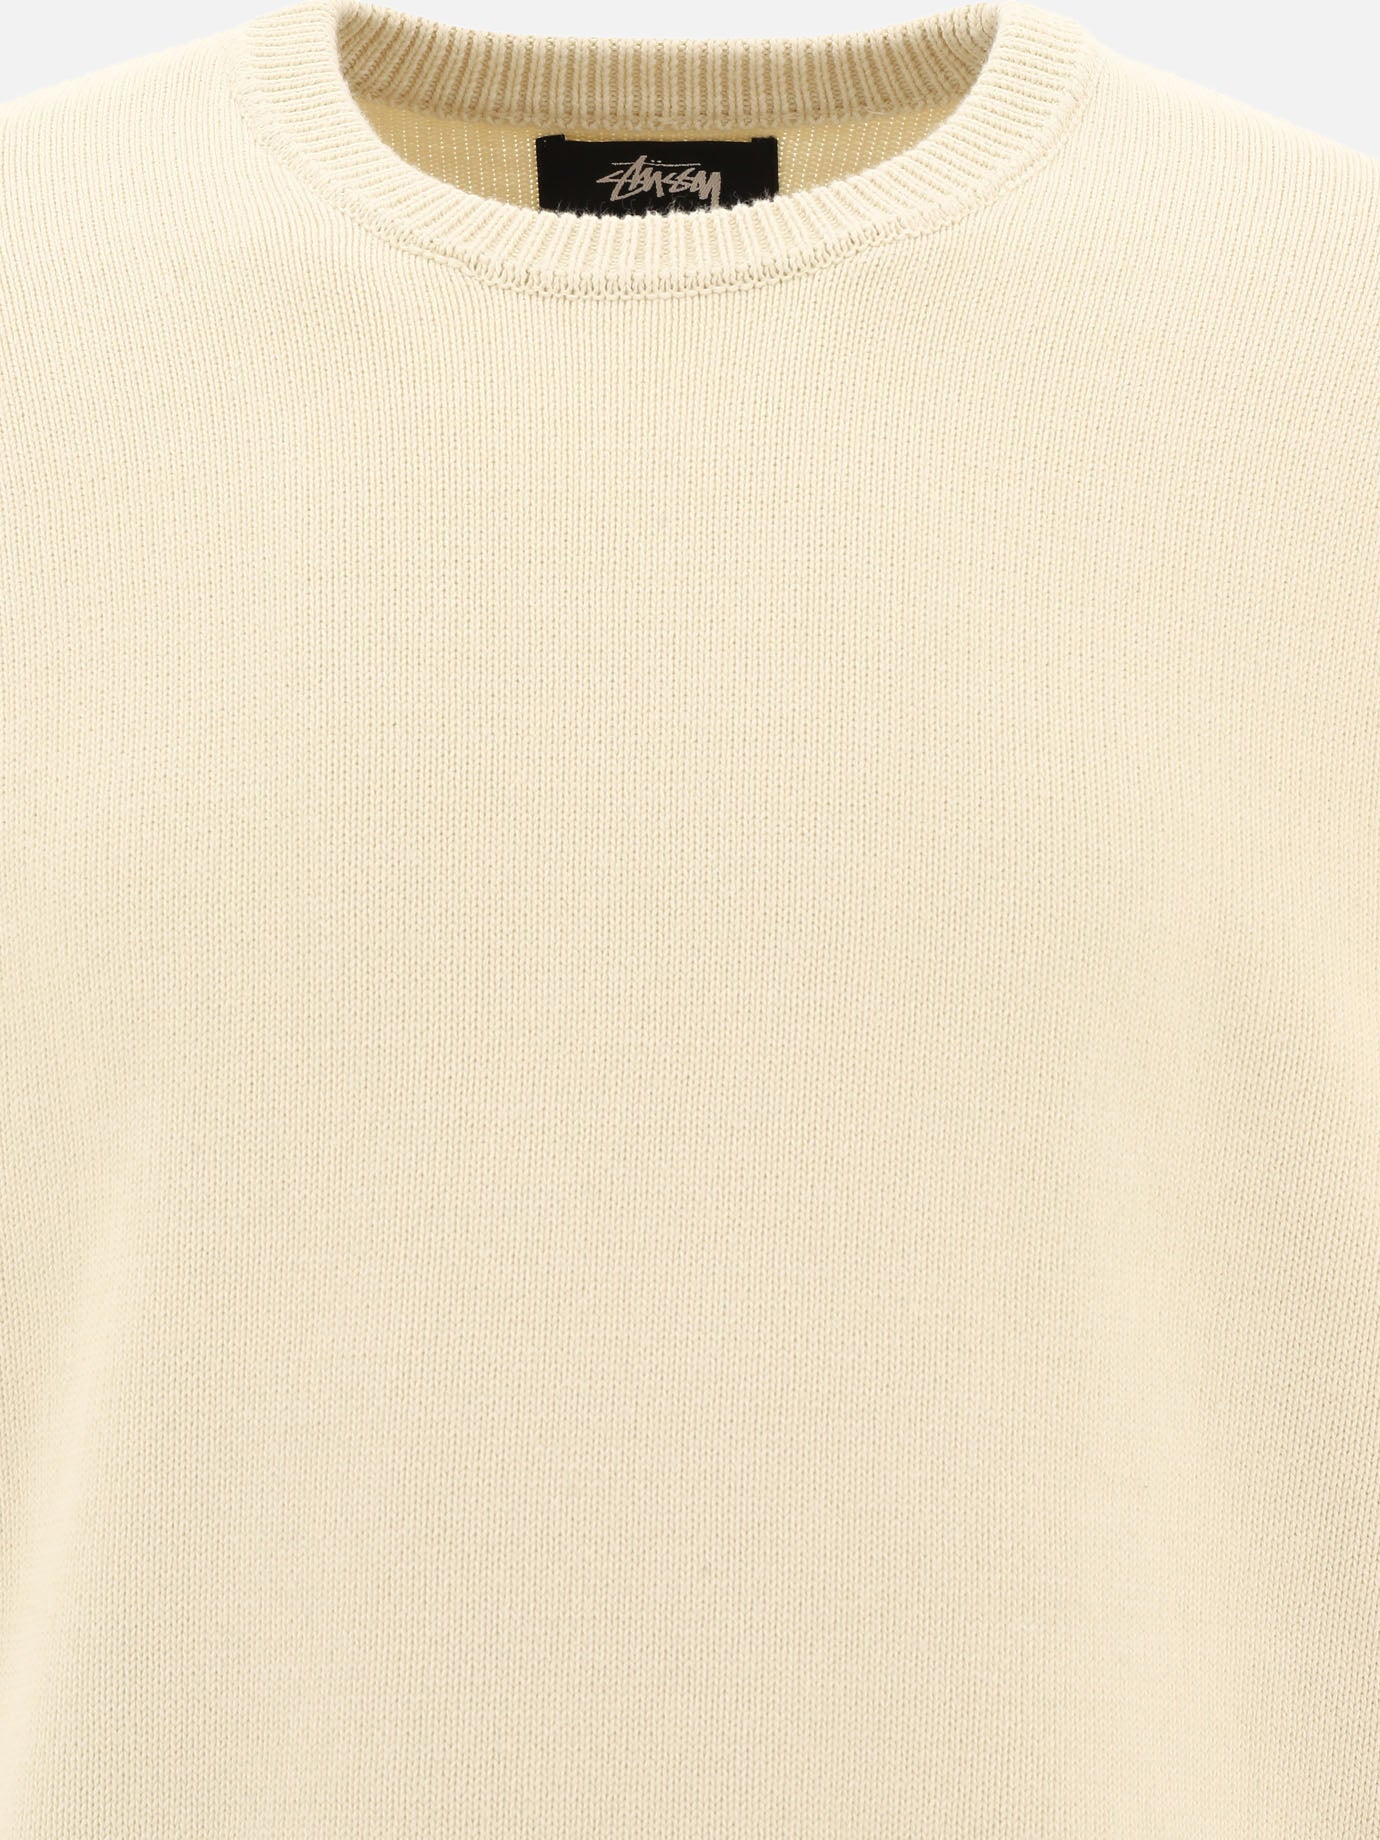 "Sleeve Logo" sweater